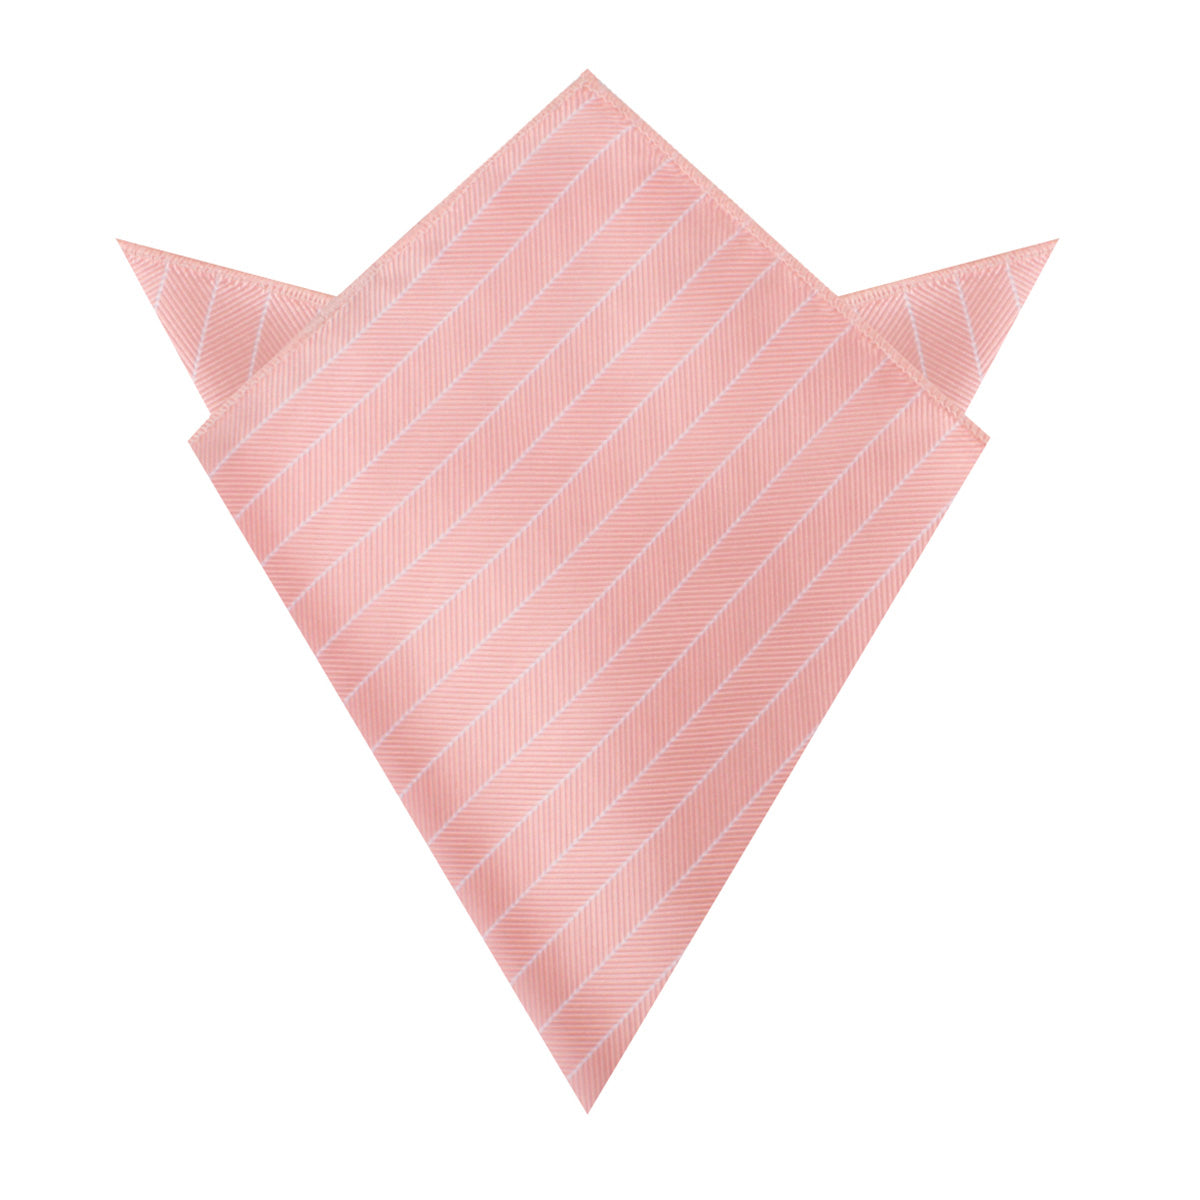 Blush Pink Herringbone Pinstripe Pocket Square